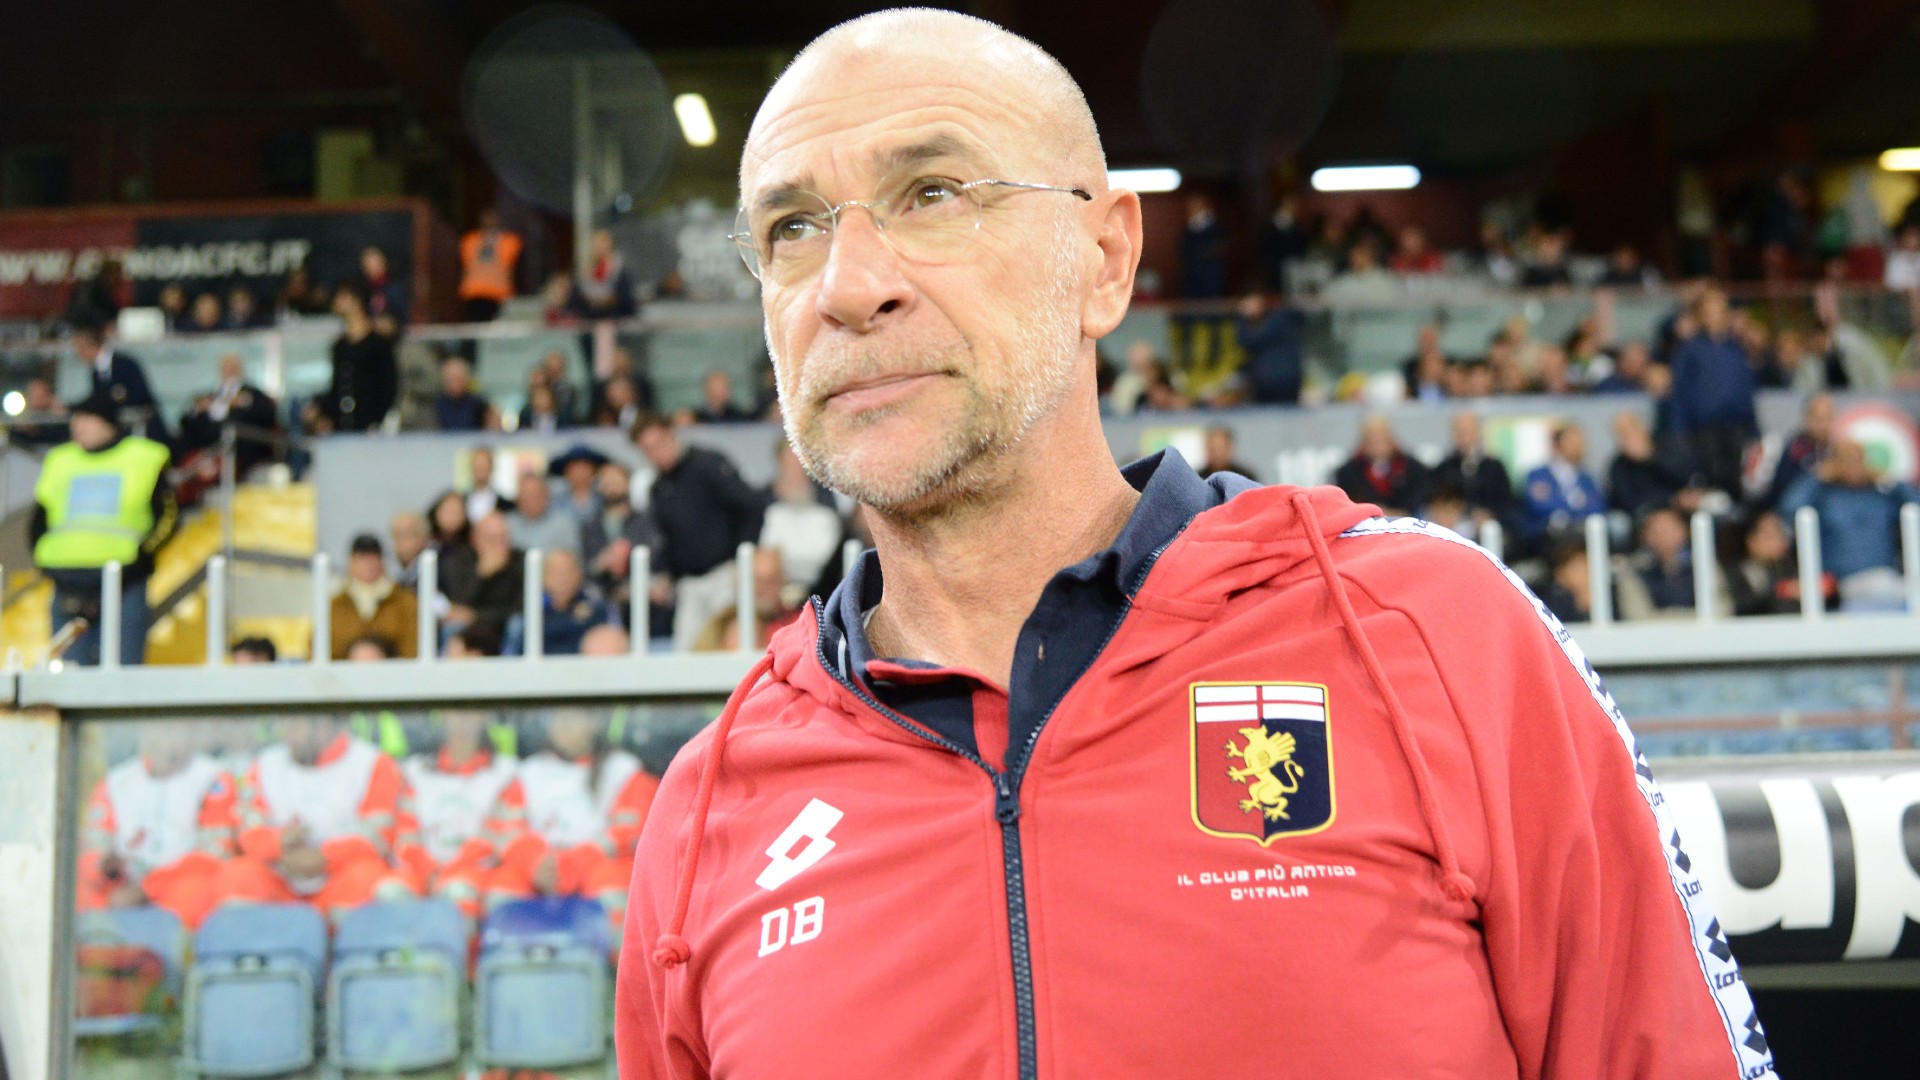 Ballardini replaces Maran at Serie A strugglers Genoa